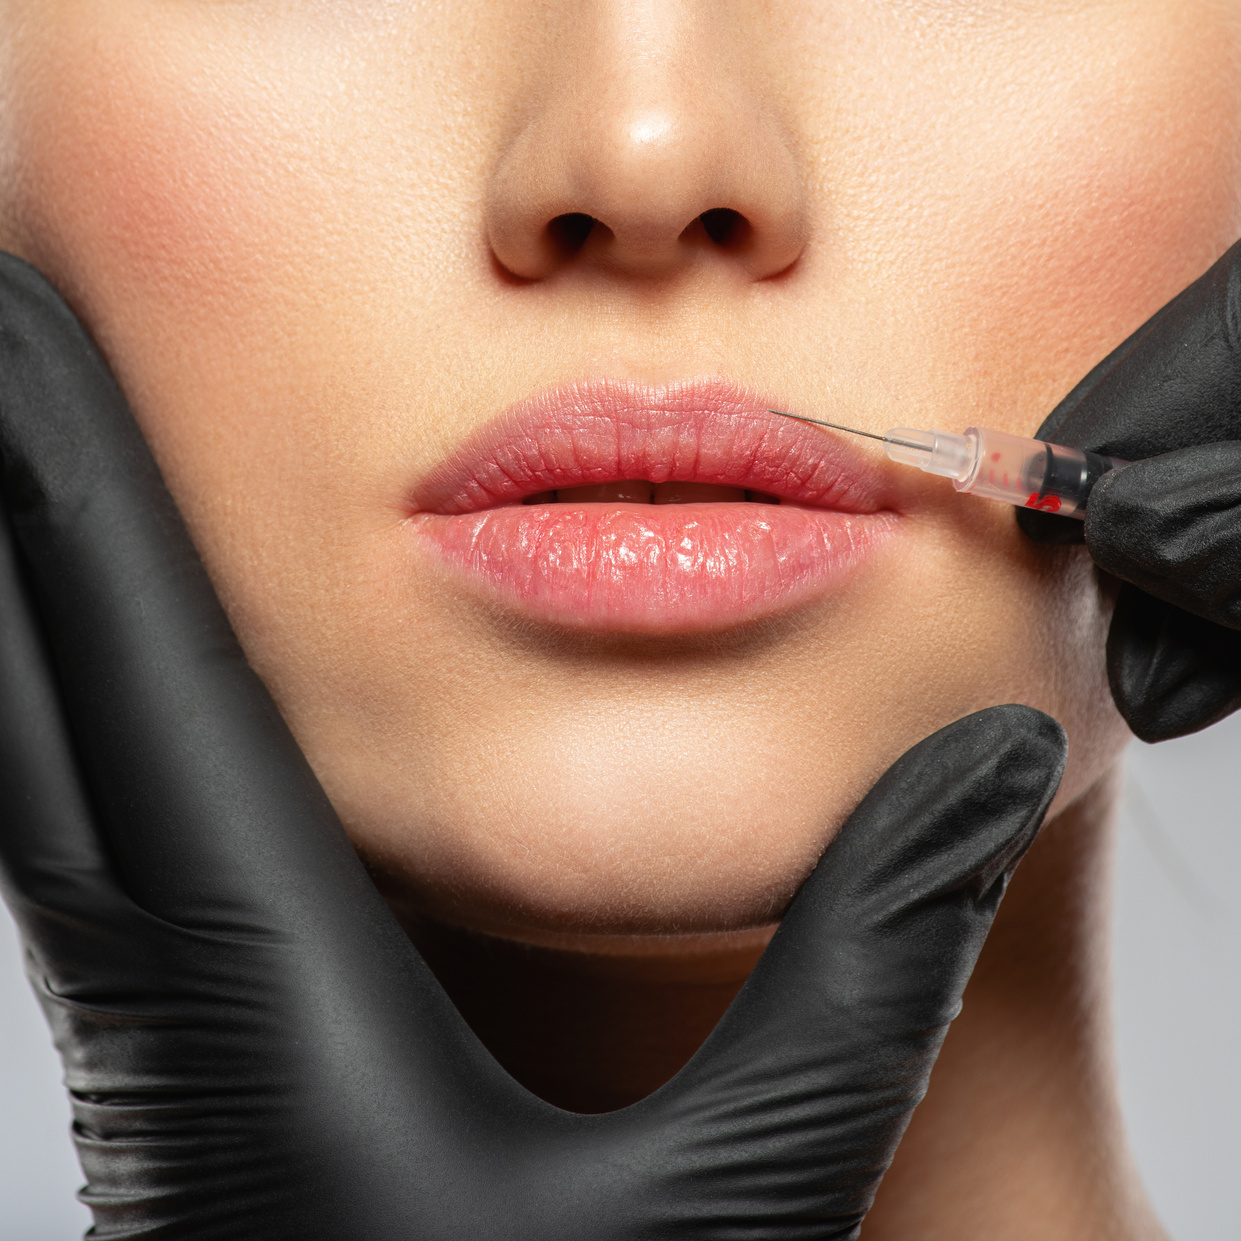 Caucasian Woman Getting Botox Cosmetic Injection in the Lips. Wo